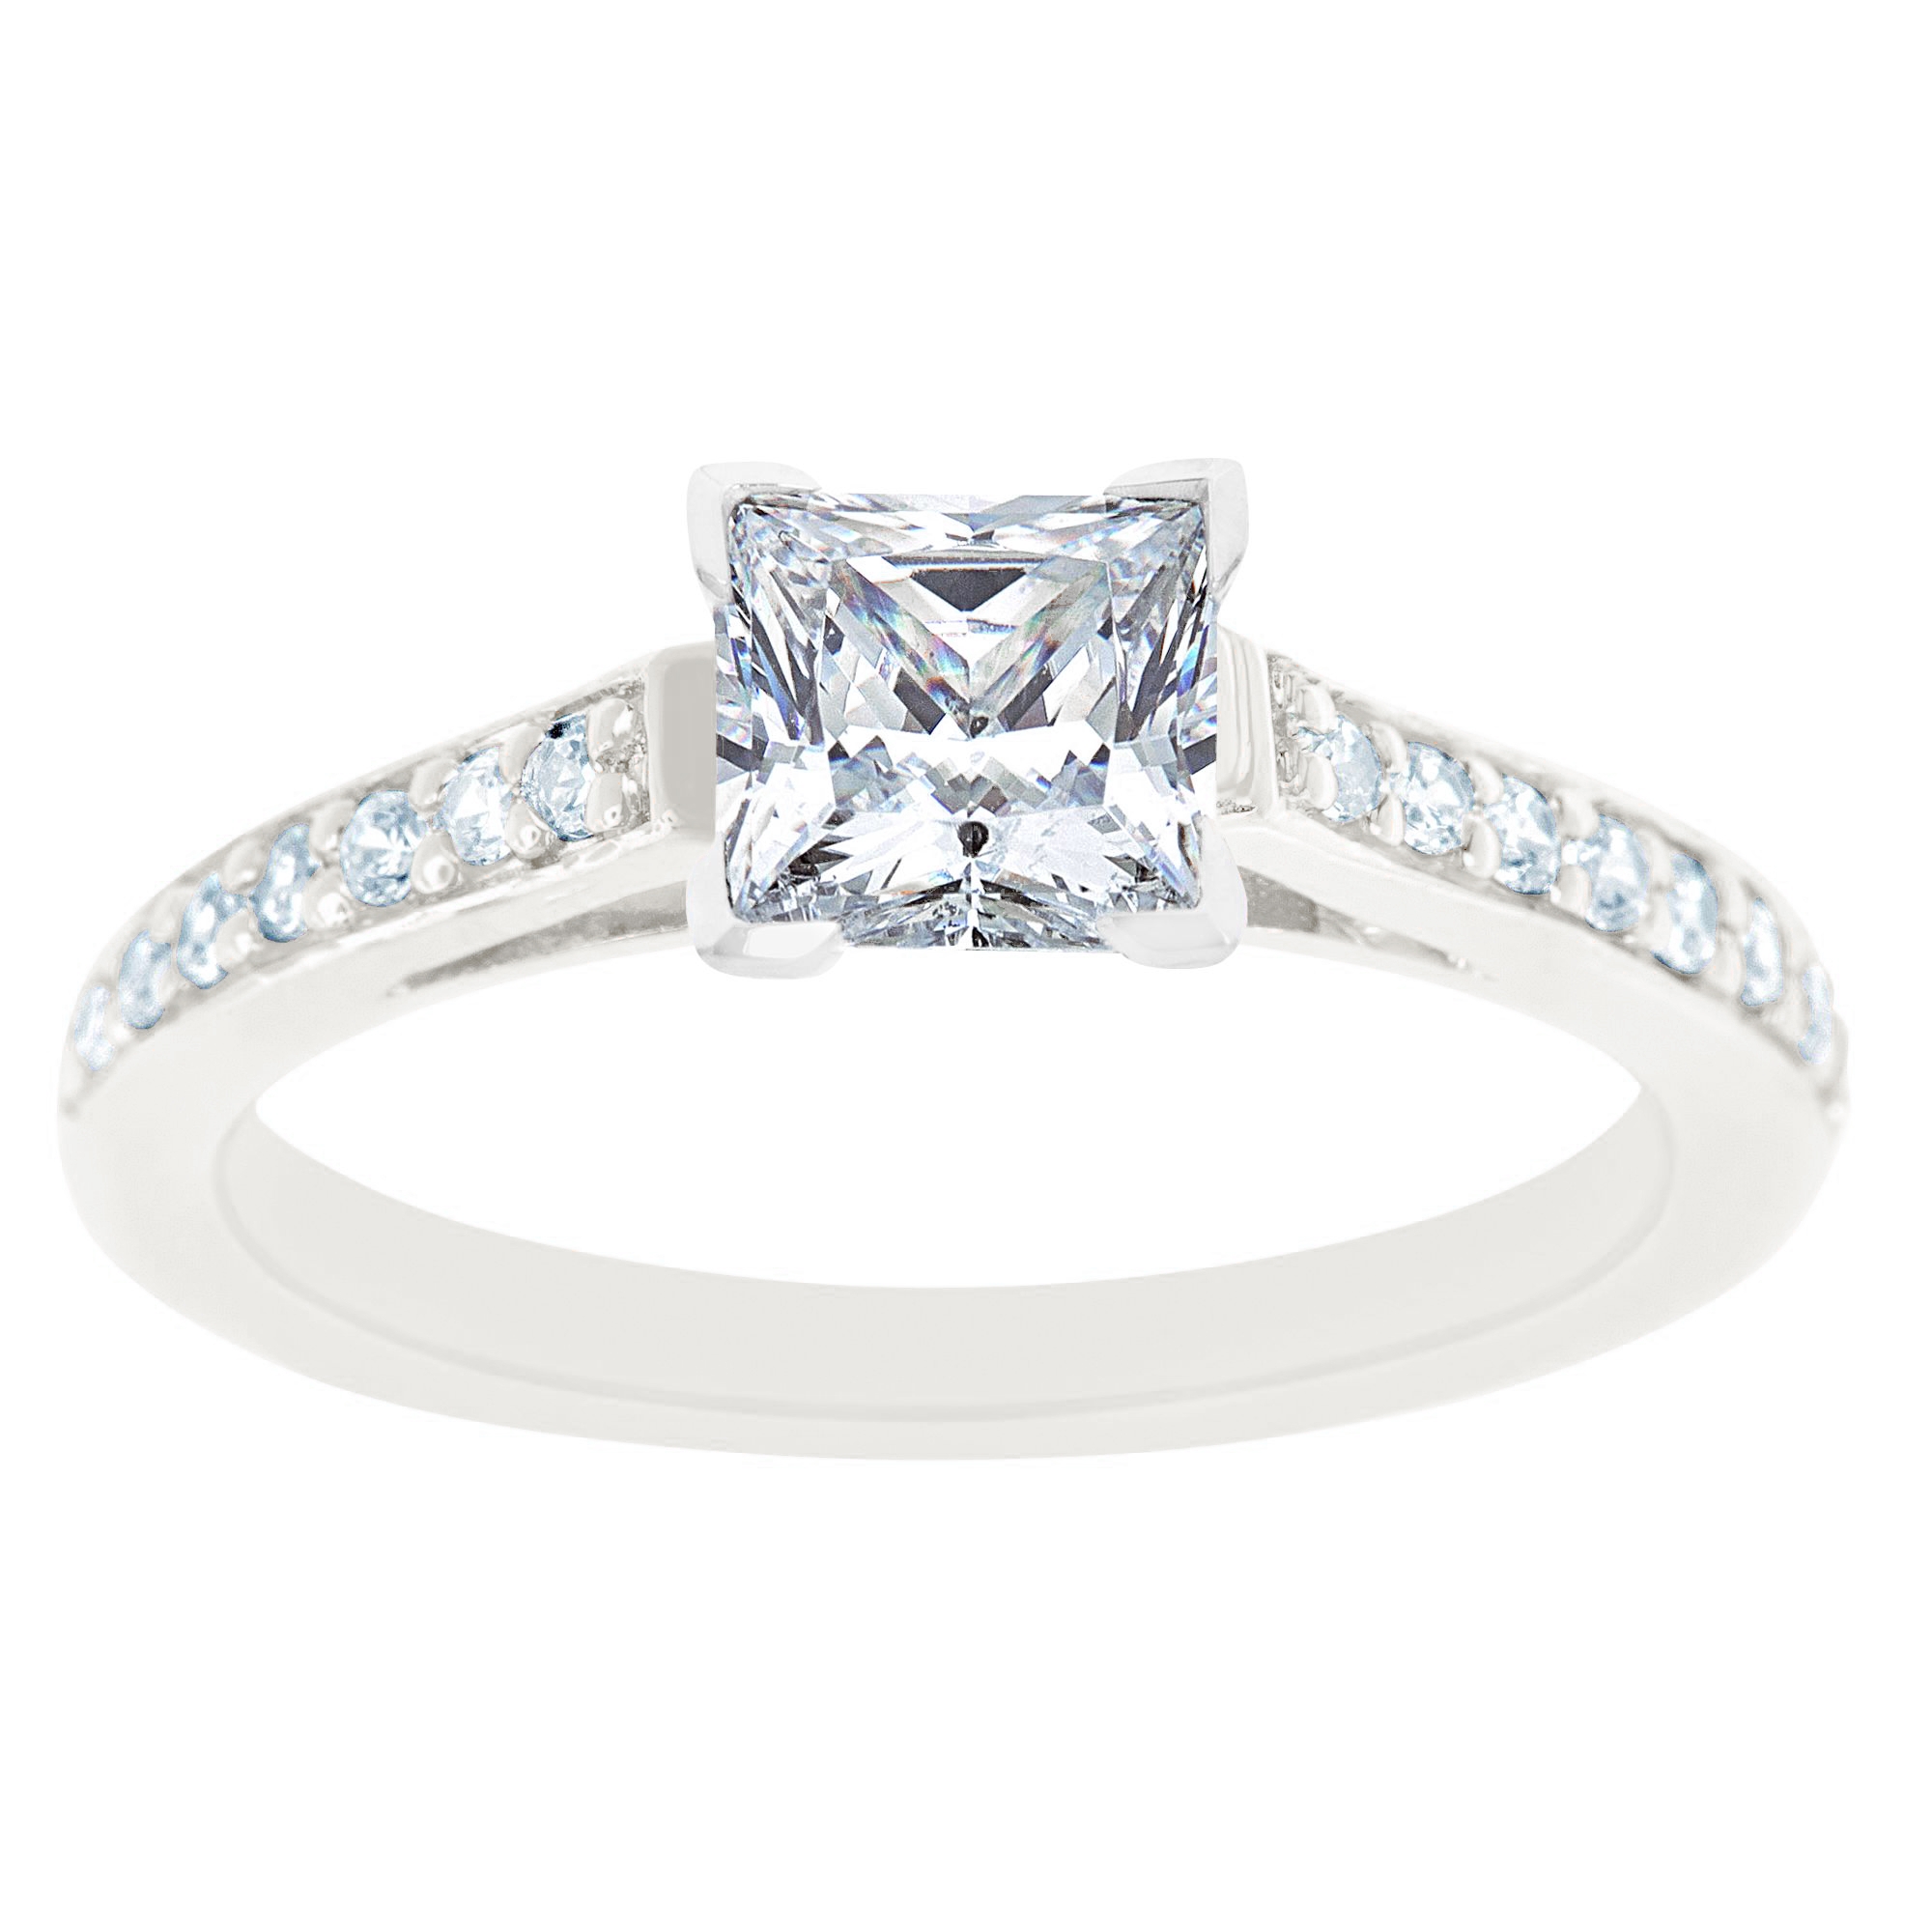 14K White Gold Cathedral Princess Cut Diamond Engagement Ring